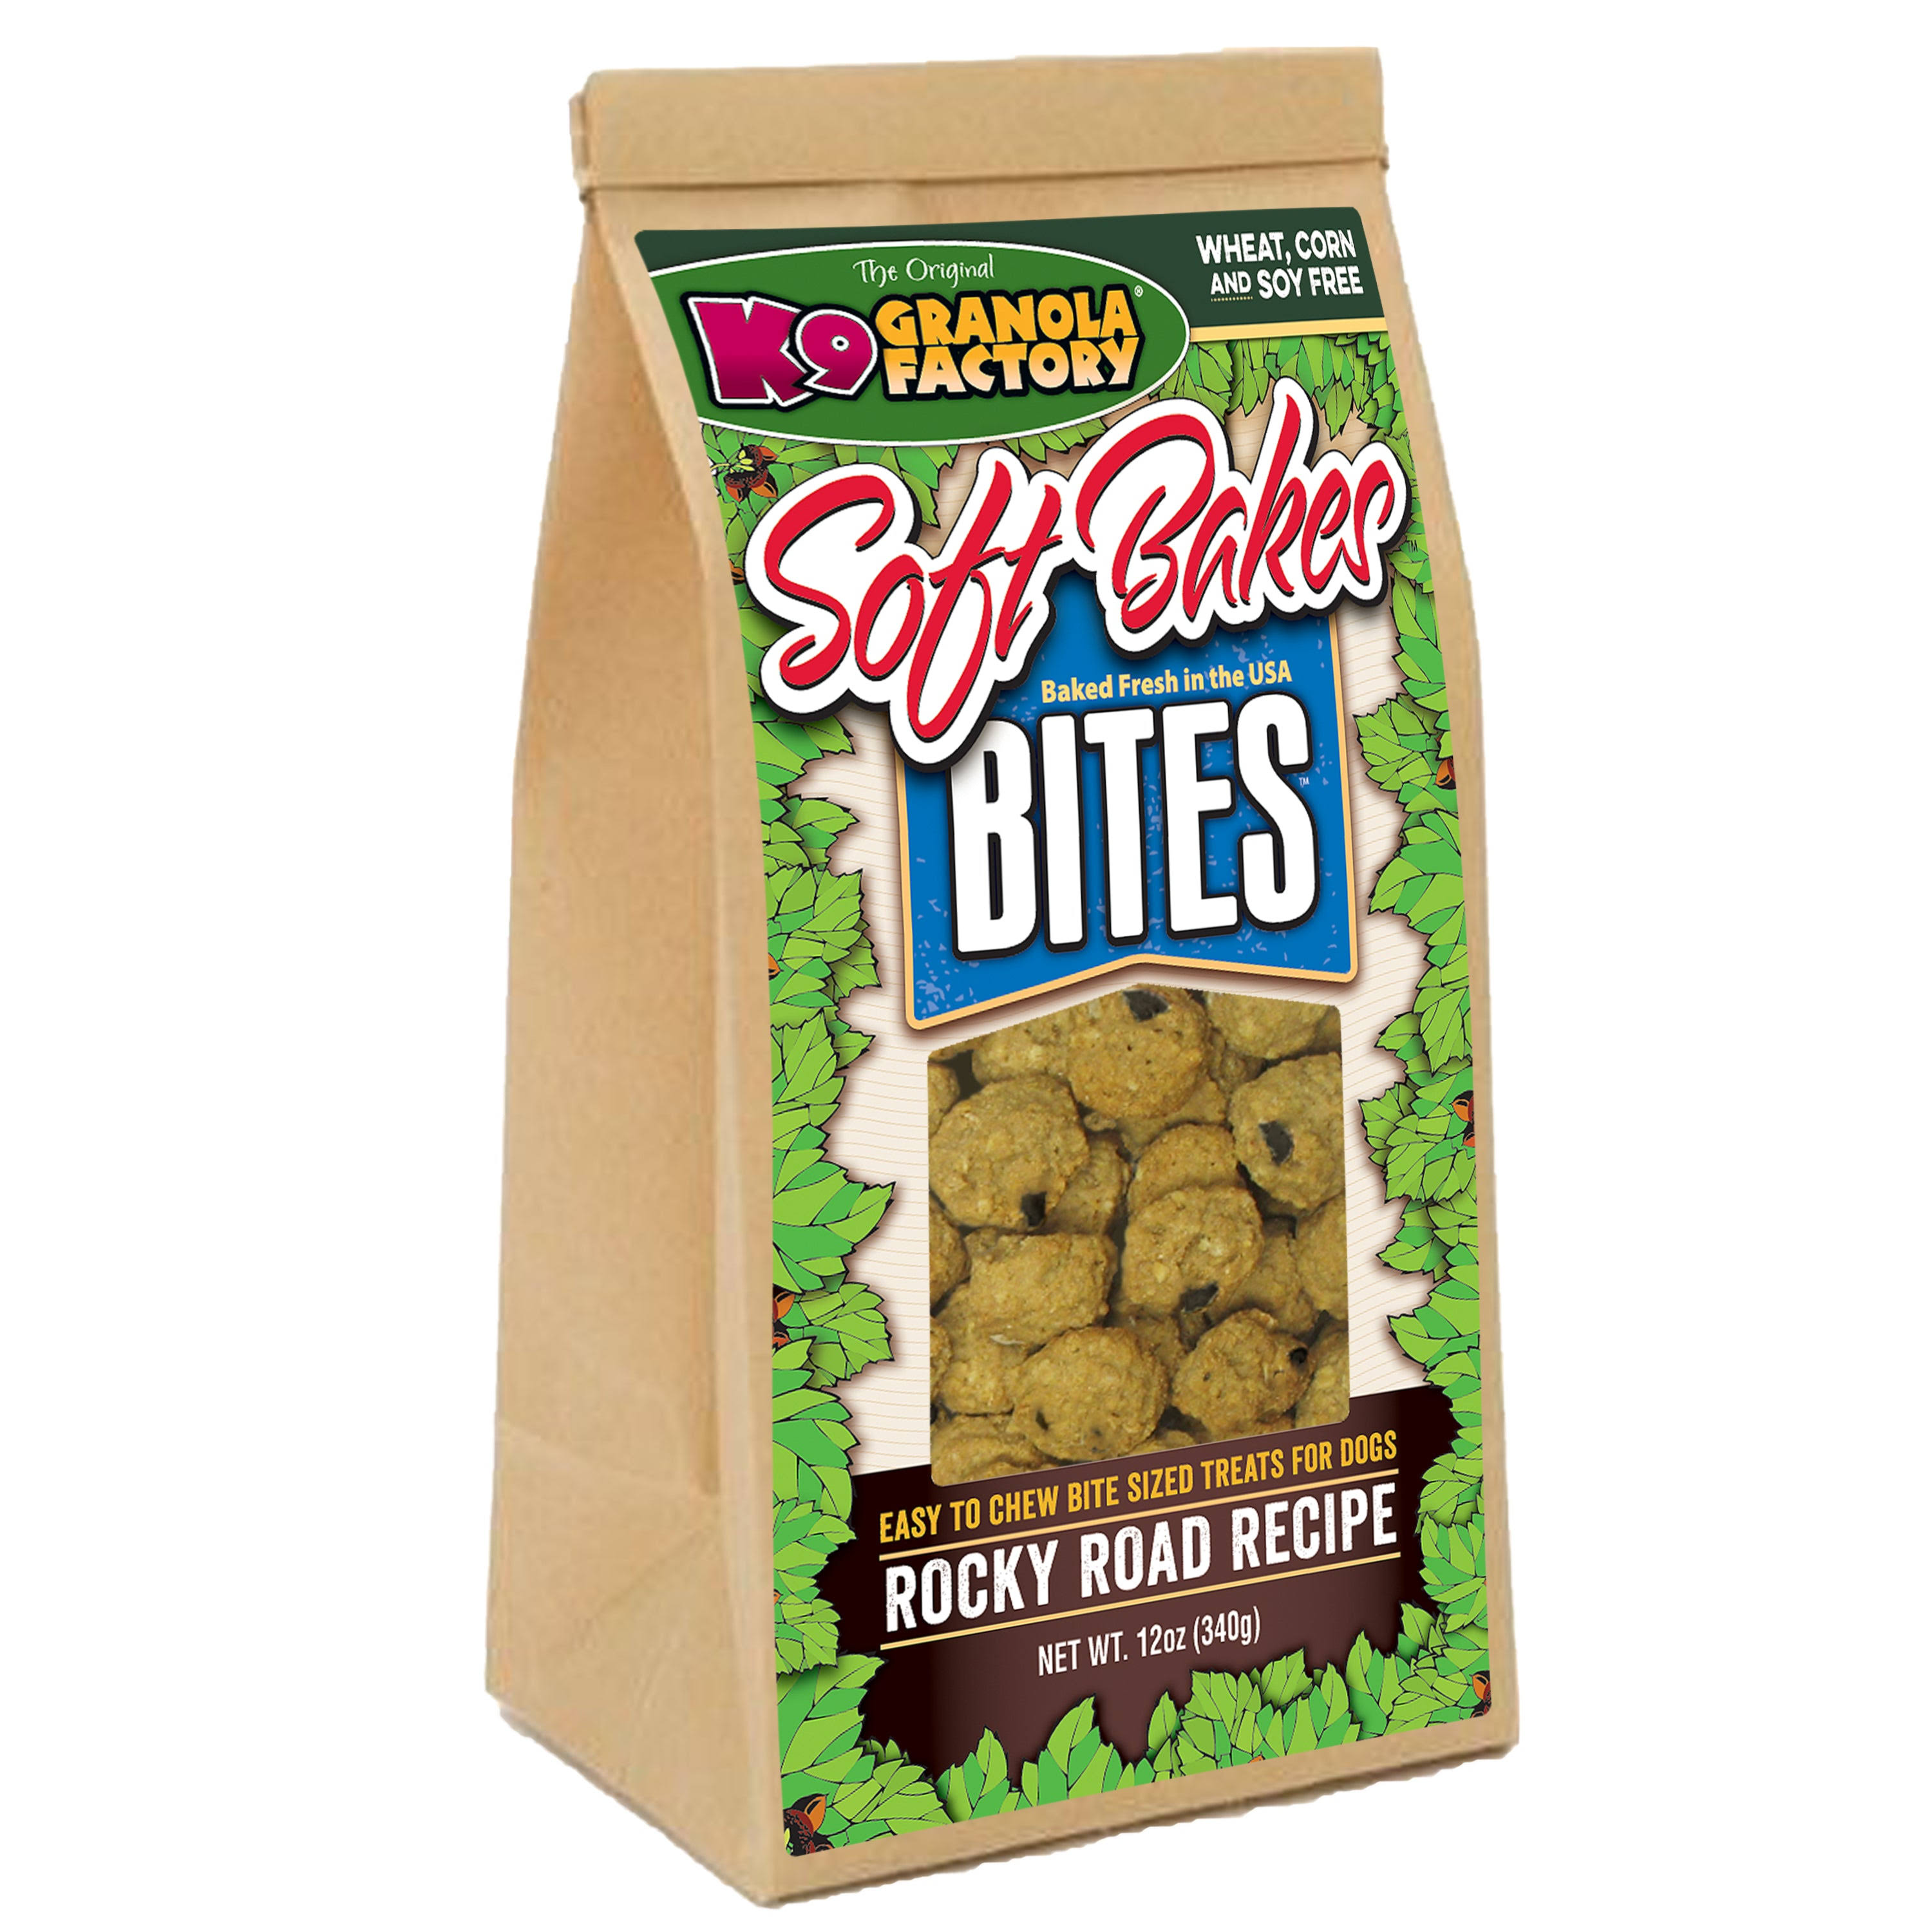 K9 Granola Factory Soft Bakes Bites - Rocky Road